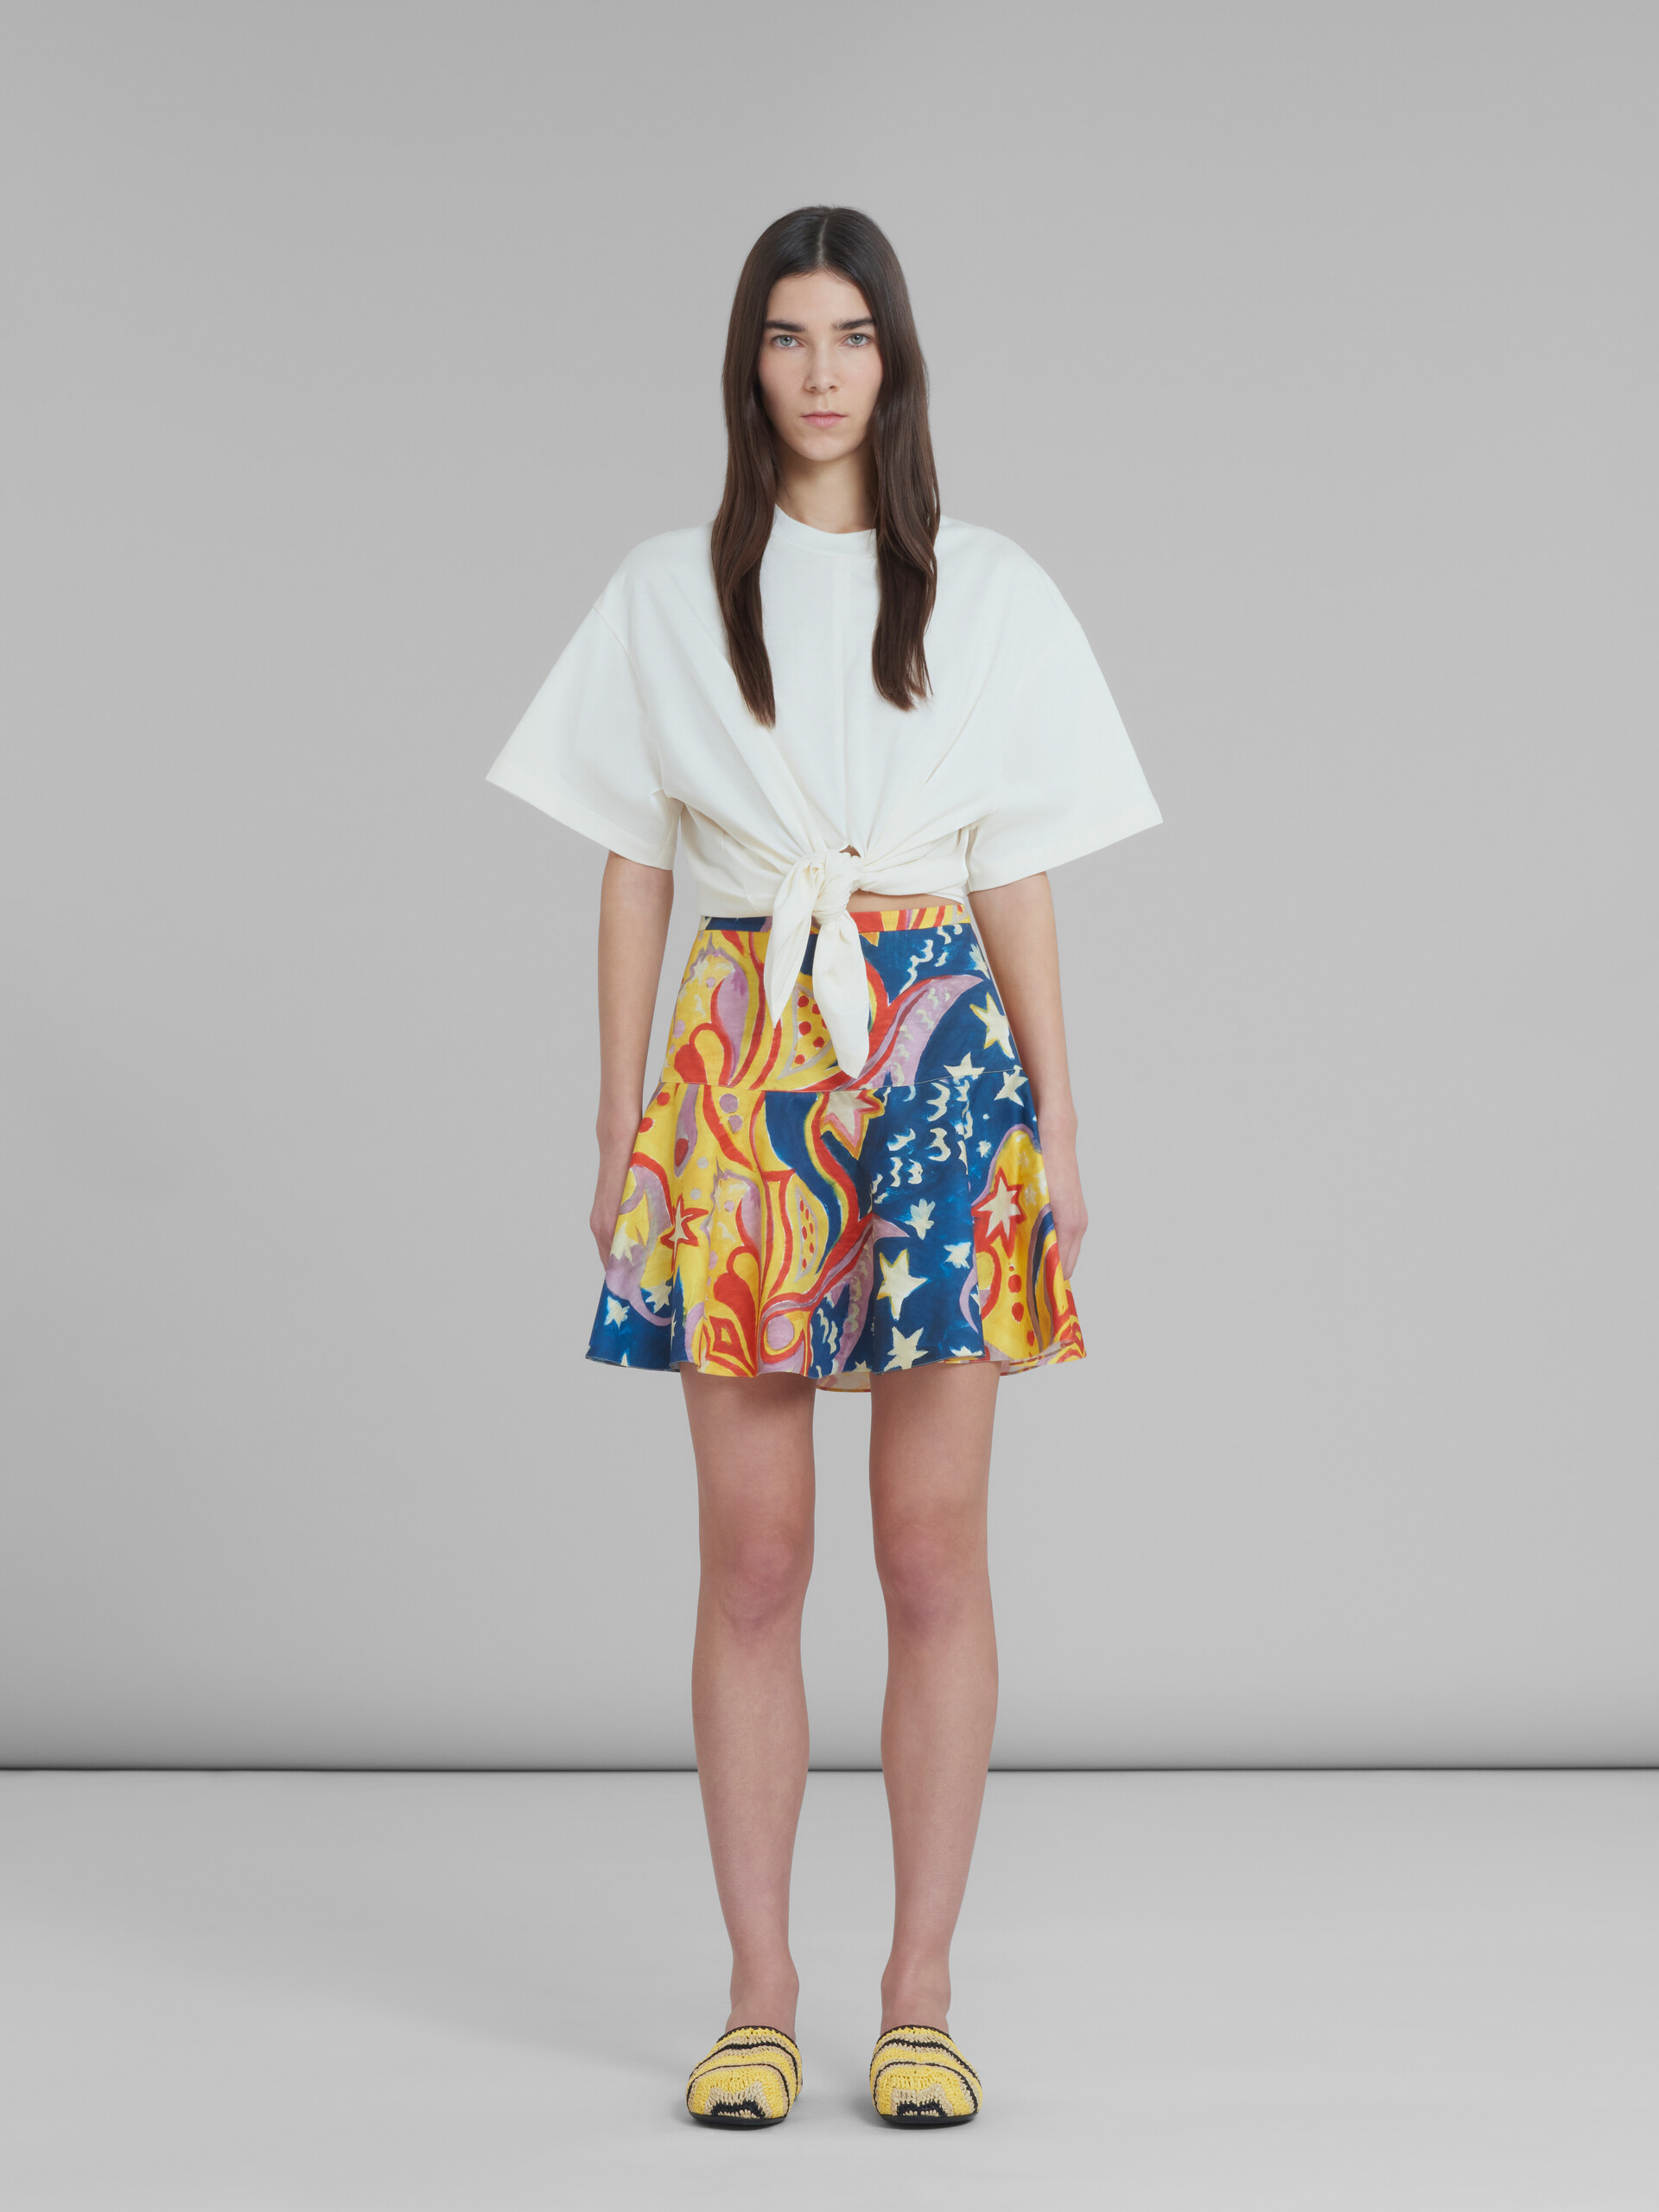 Marni x No Vacancy Inn - Cotton flounce skirt with Galactic Paradise print - Skirts - Image 2